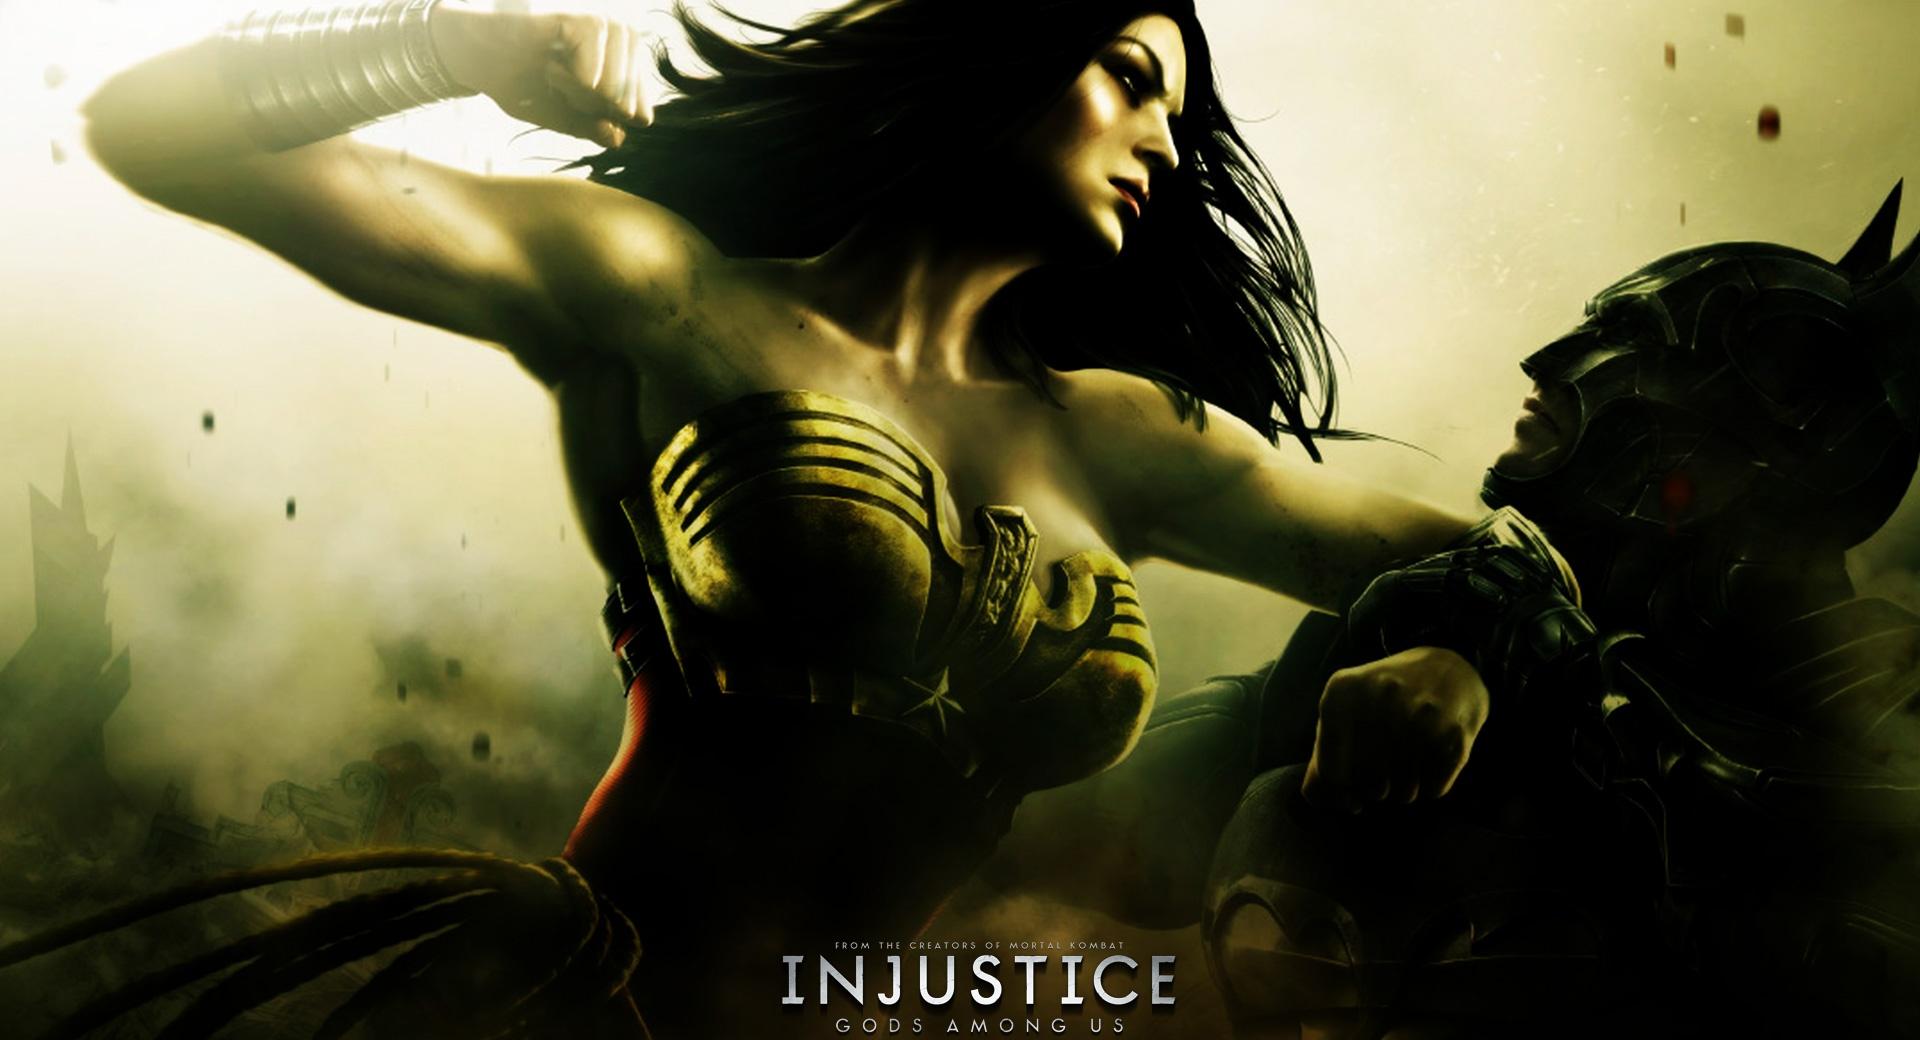 Injustice Gods Among Us - Batman vs Wonder Woman at 1600 x 1200 size wallpapers HD quality